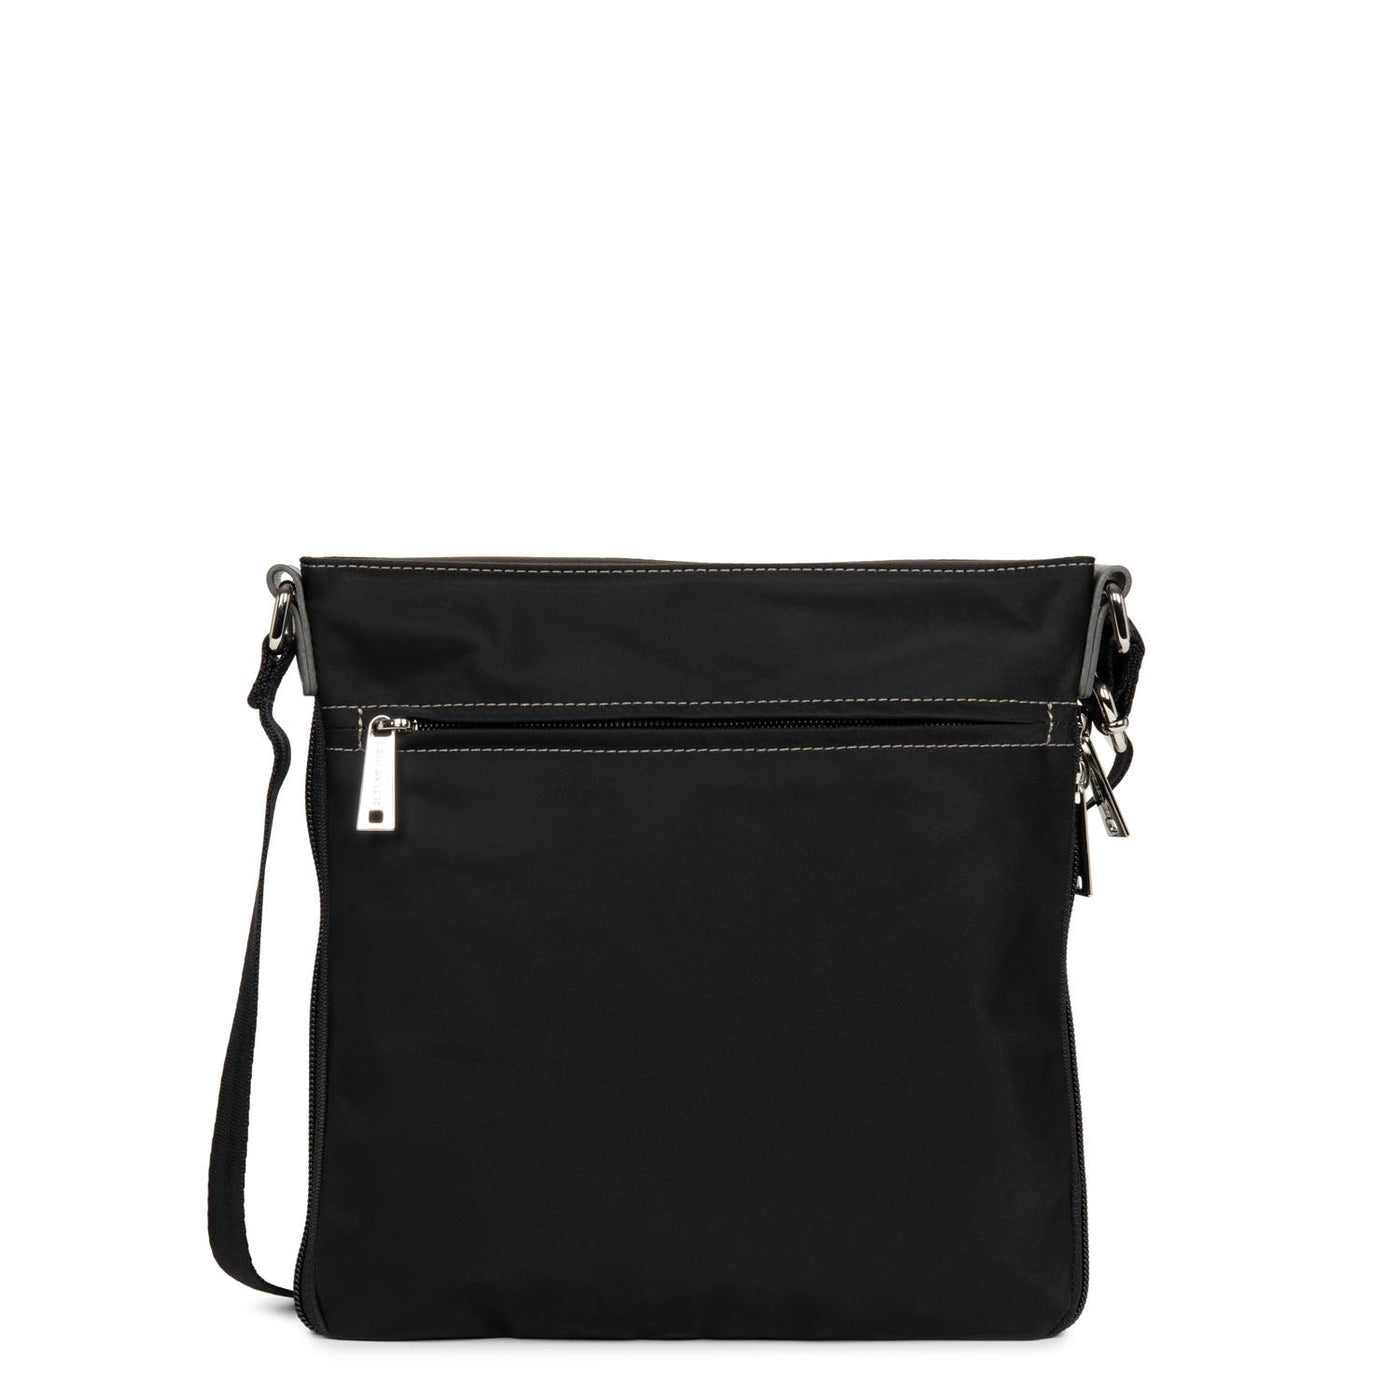 crossbody bag - basic sport #couleur_noir-taupe-galet